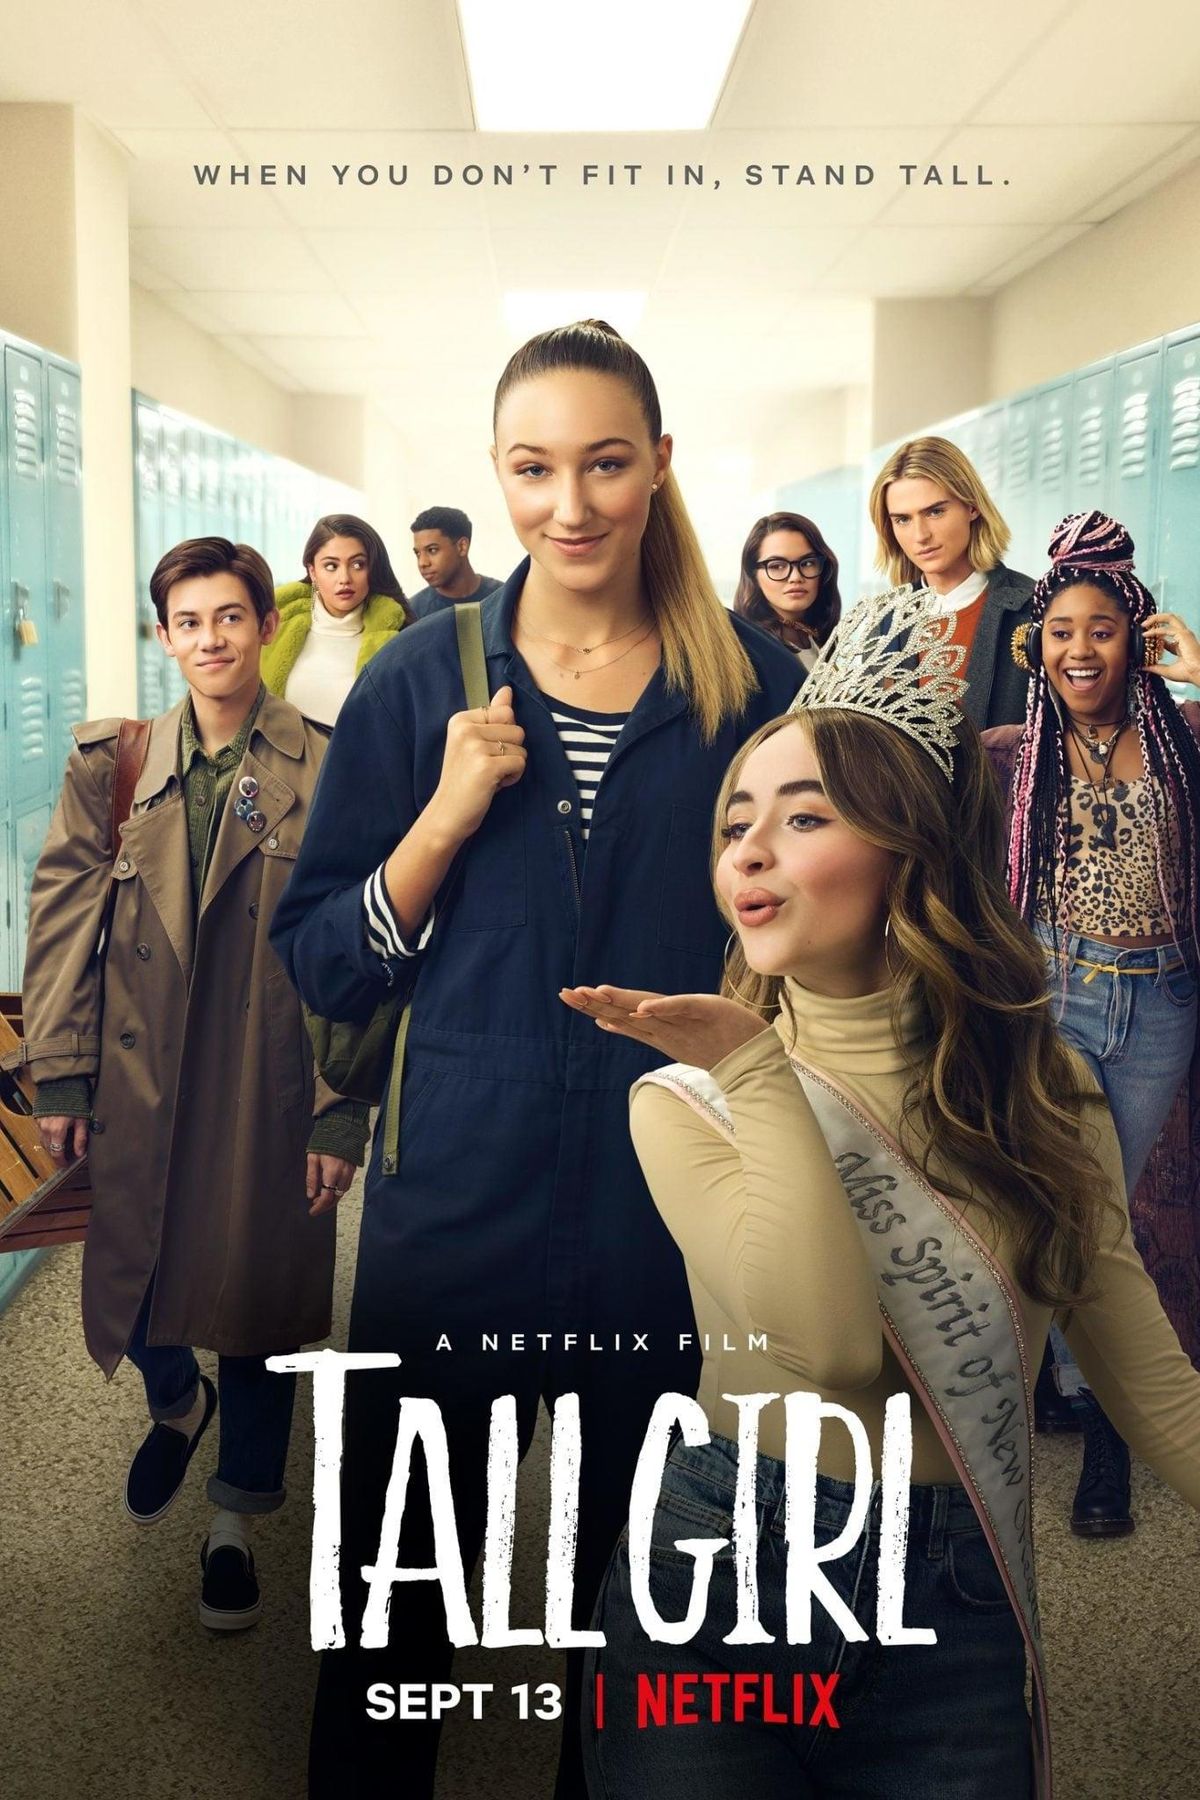 TALL GIRL Trailer (2019) 